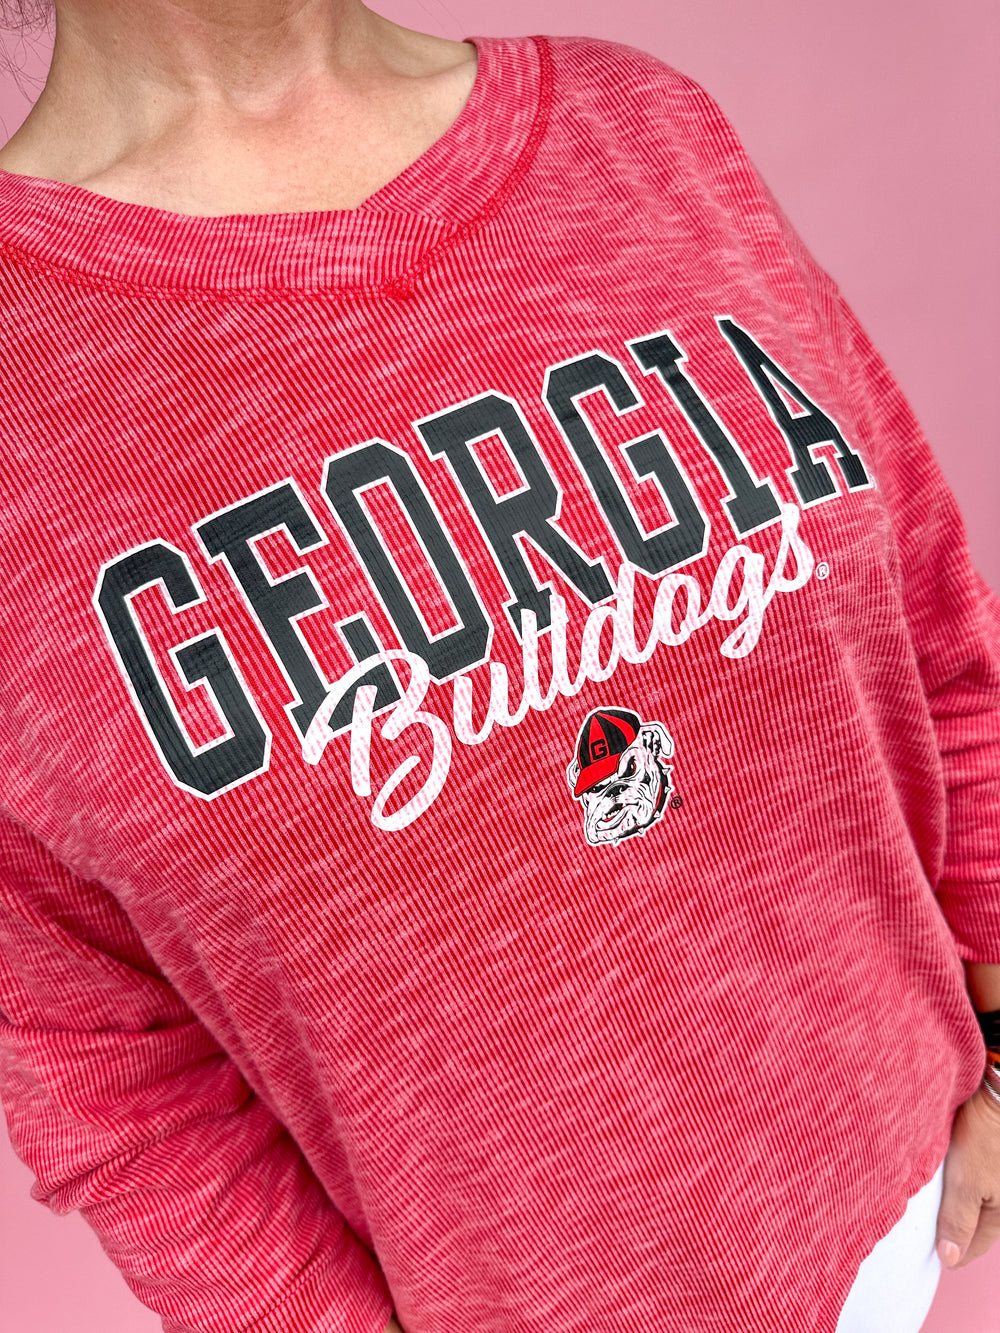 Ribbed Georgia Bulldogs Sweatshirt